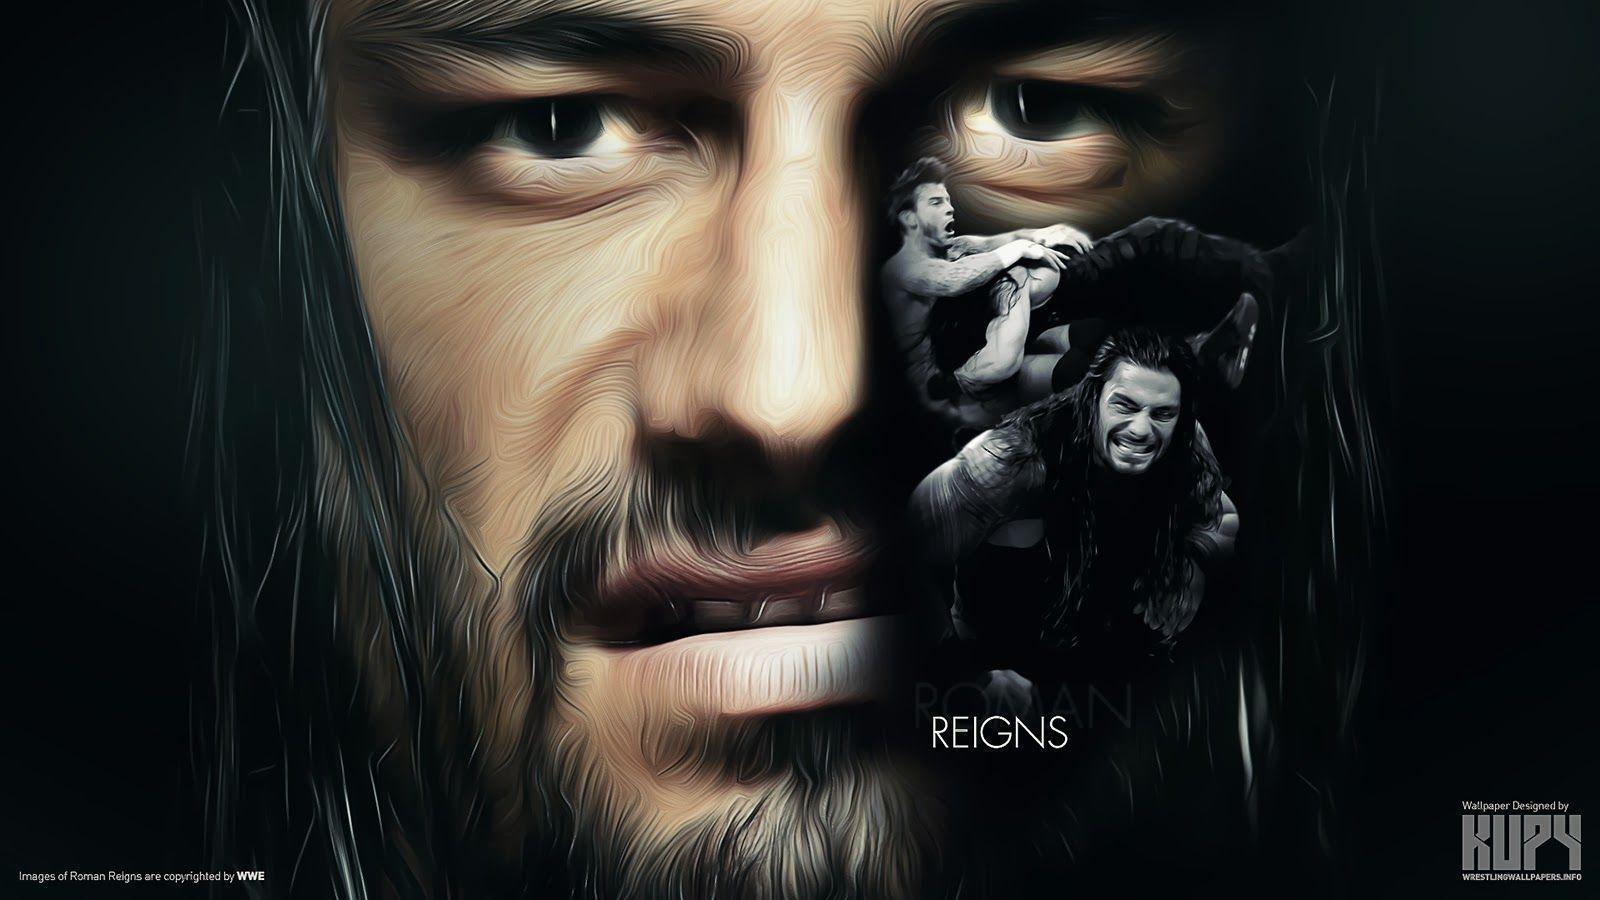 WWE Roman Reigns Wallpaper HD